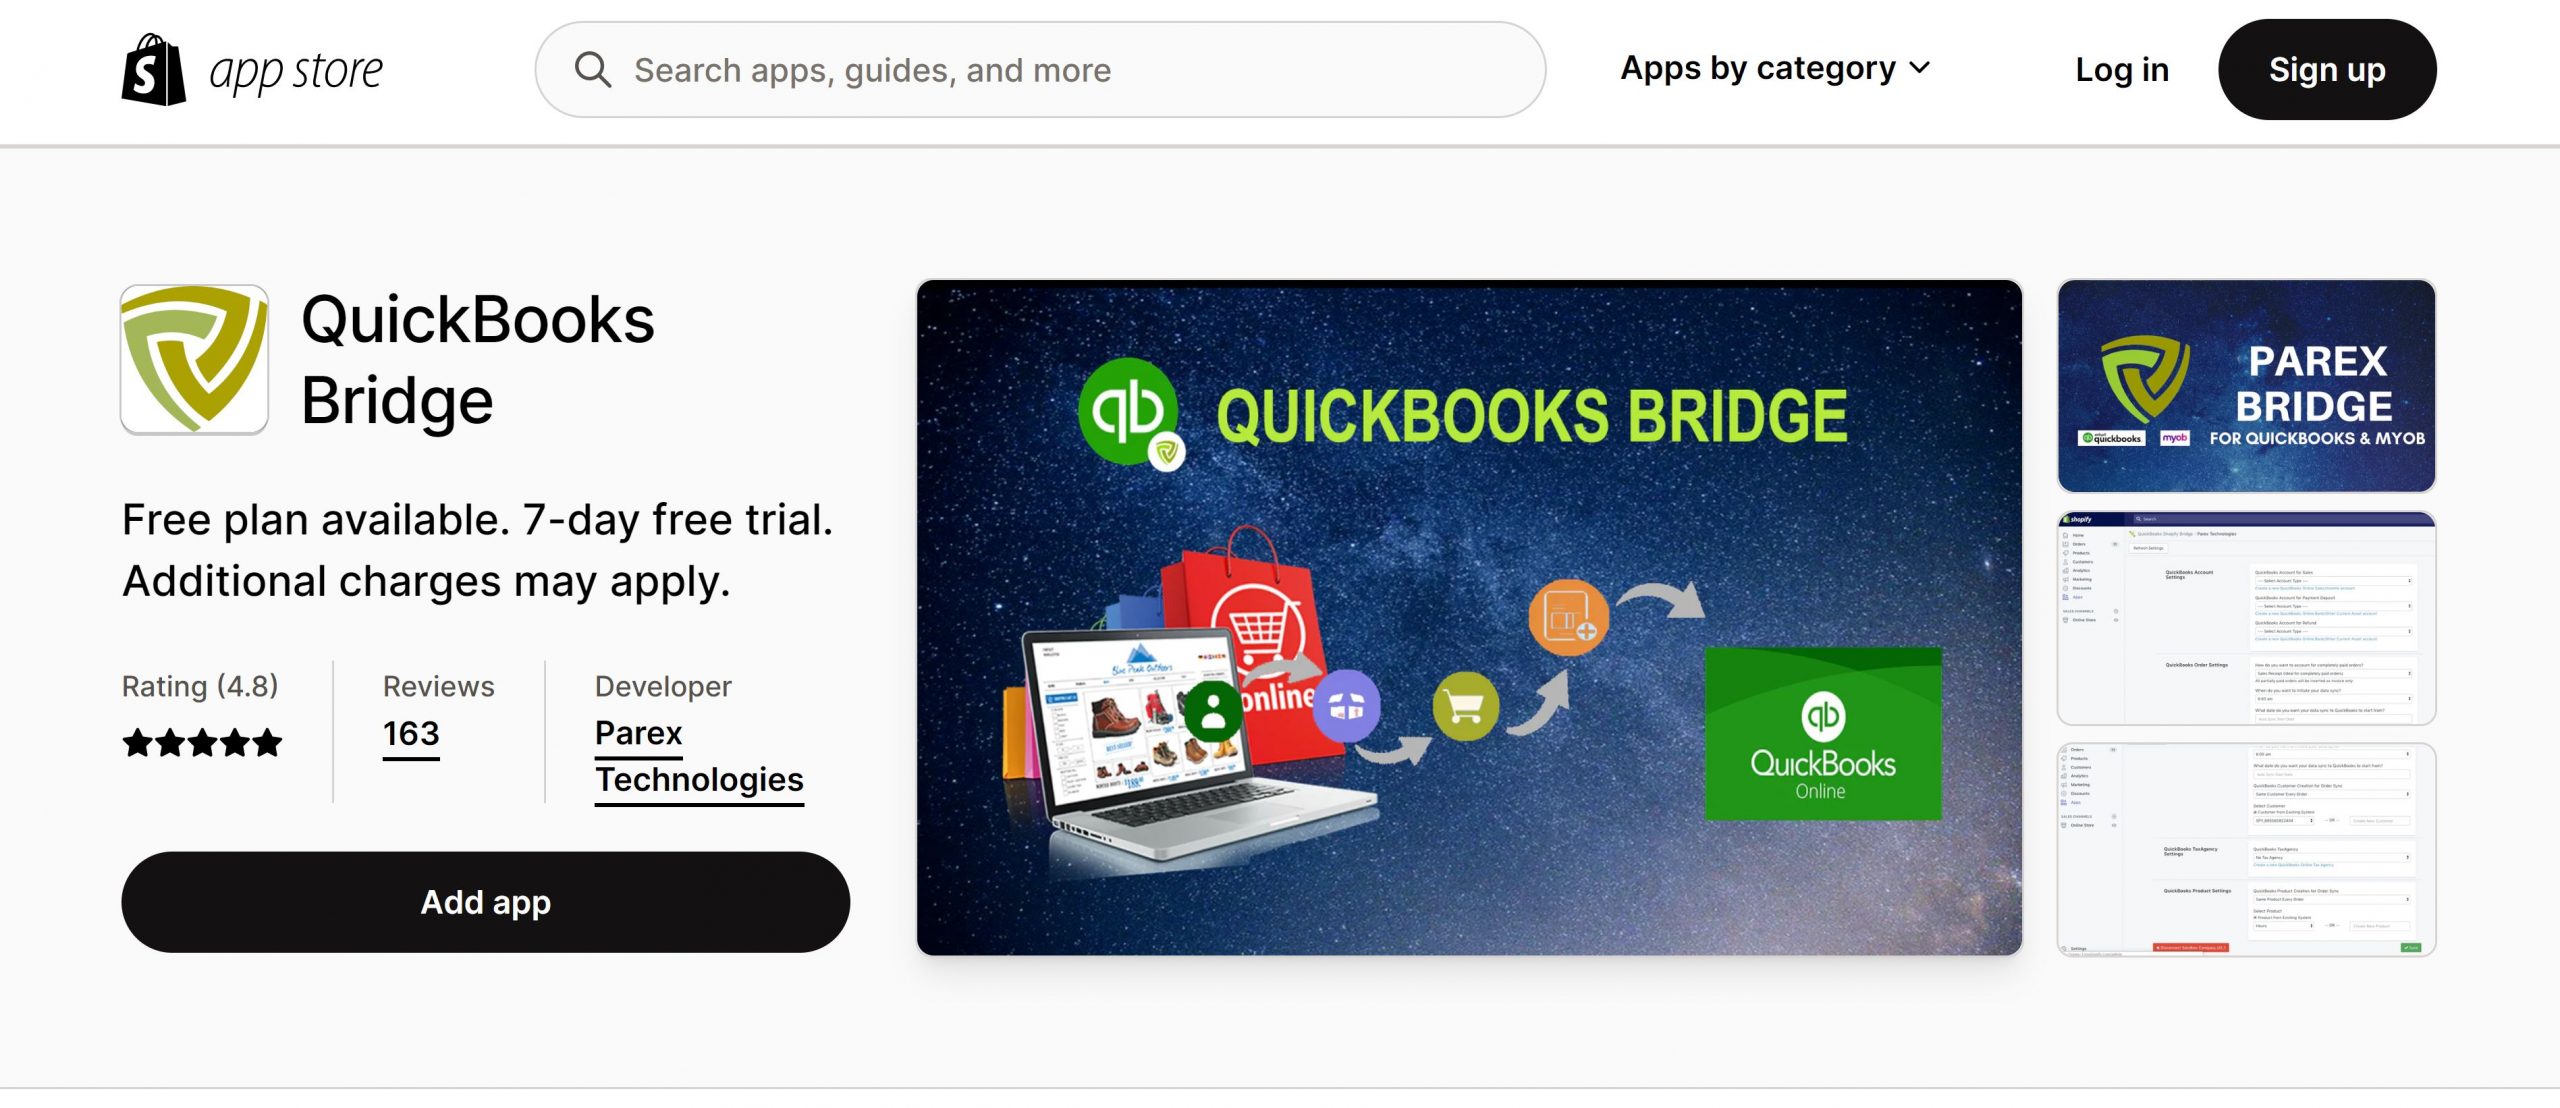 QuickBooks Bridge by Parex on the Shopify app store.